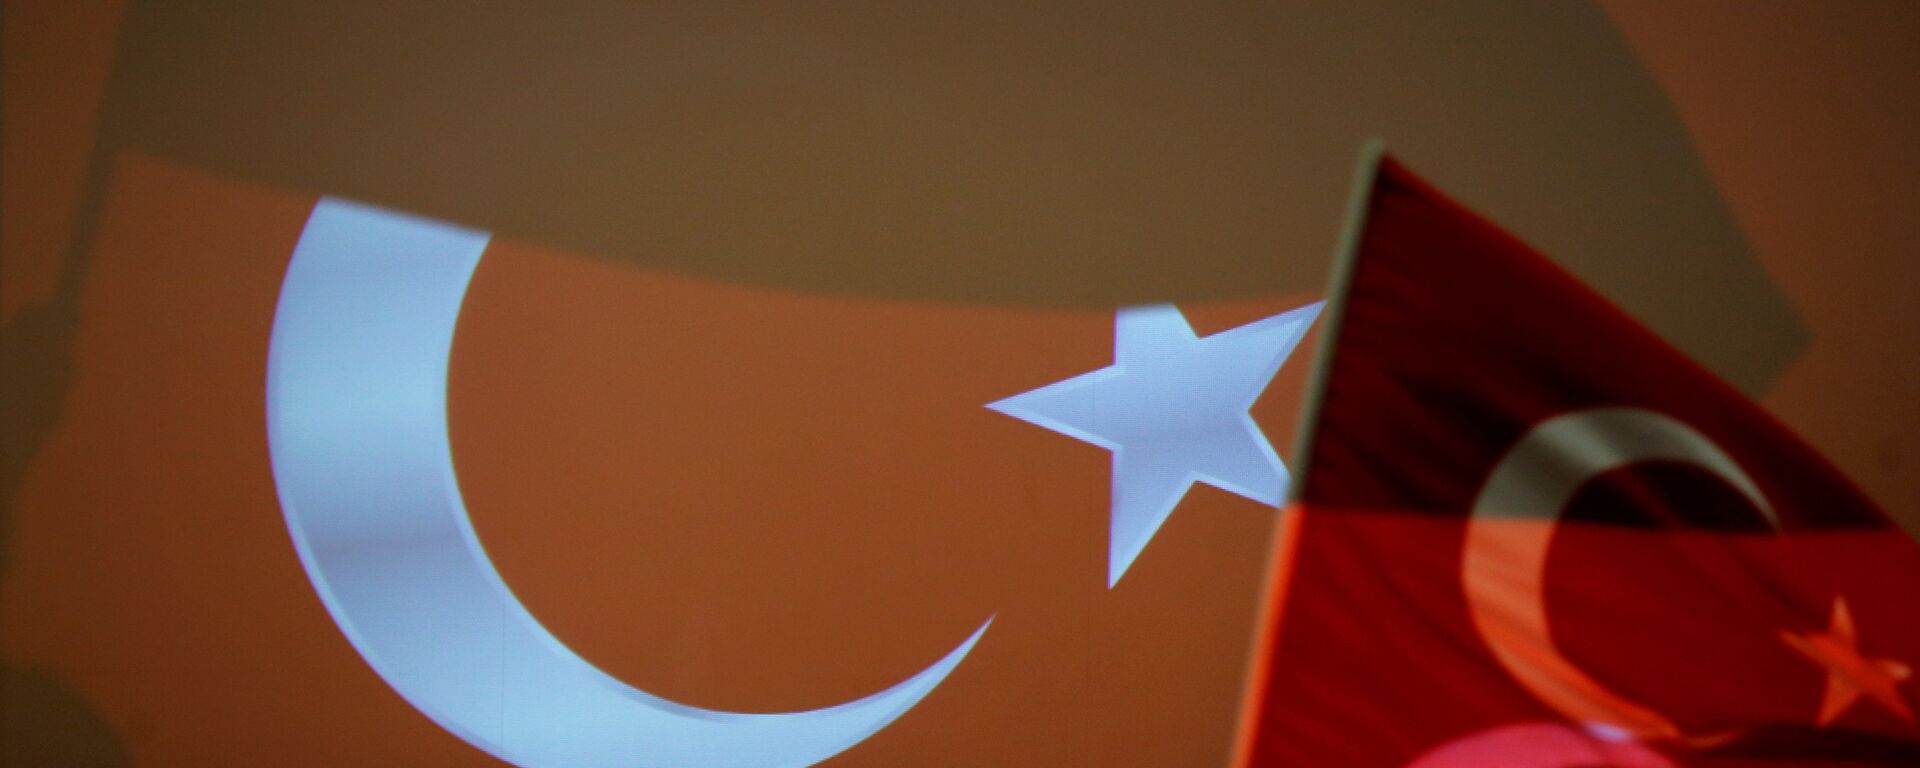 Bandera de Turquía - Sputnik Mundo, 1920, 27.12.2021